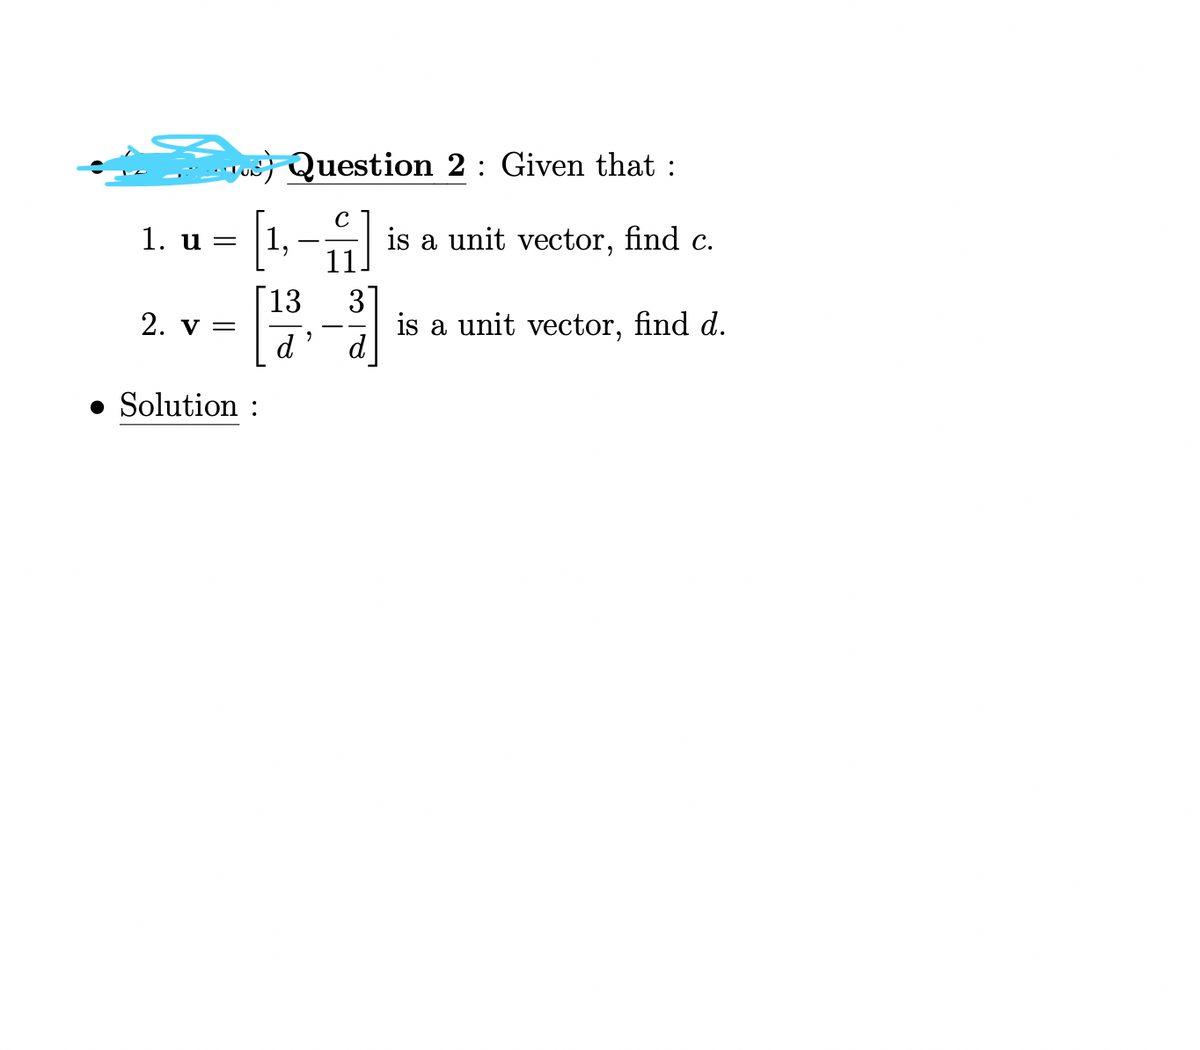 1. u =
2. V =
Question 2 : Given that :
C
[1-4]
13
3
d
● Solution :
"
is a unit vector, find c.
is a unit vector, find d.